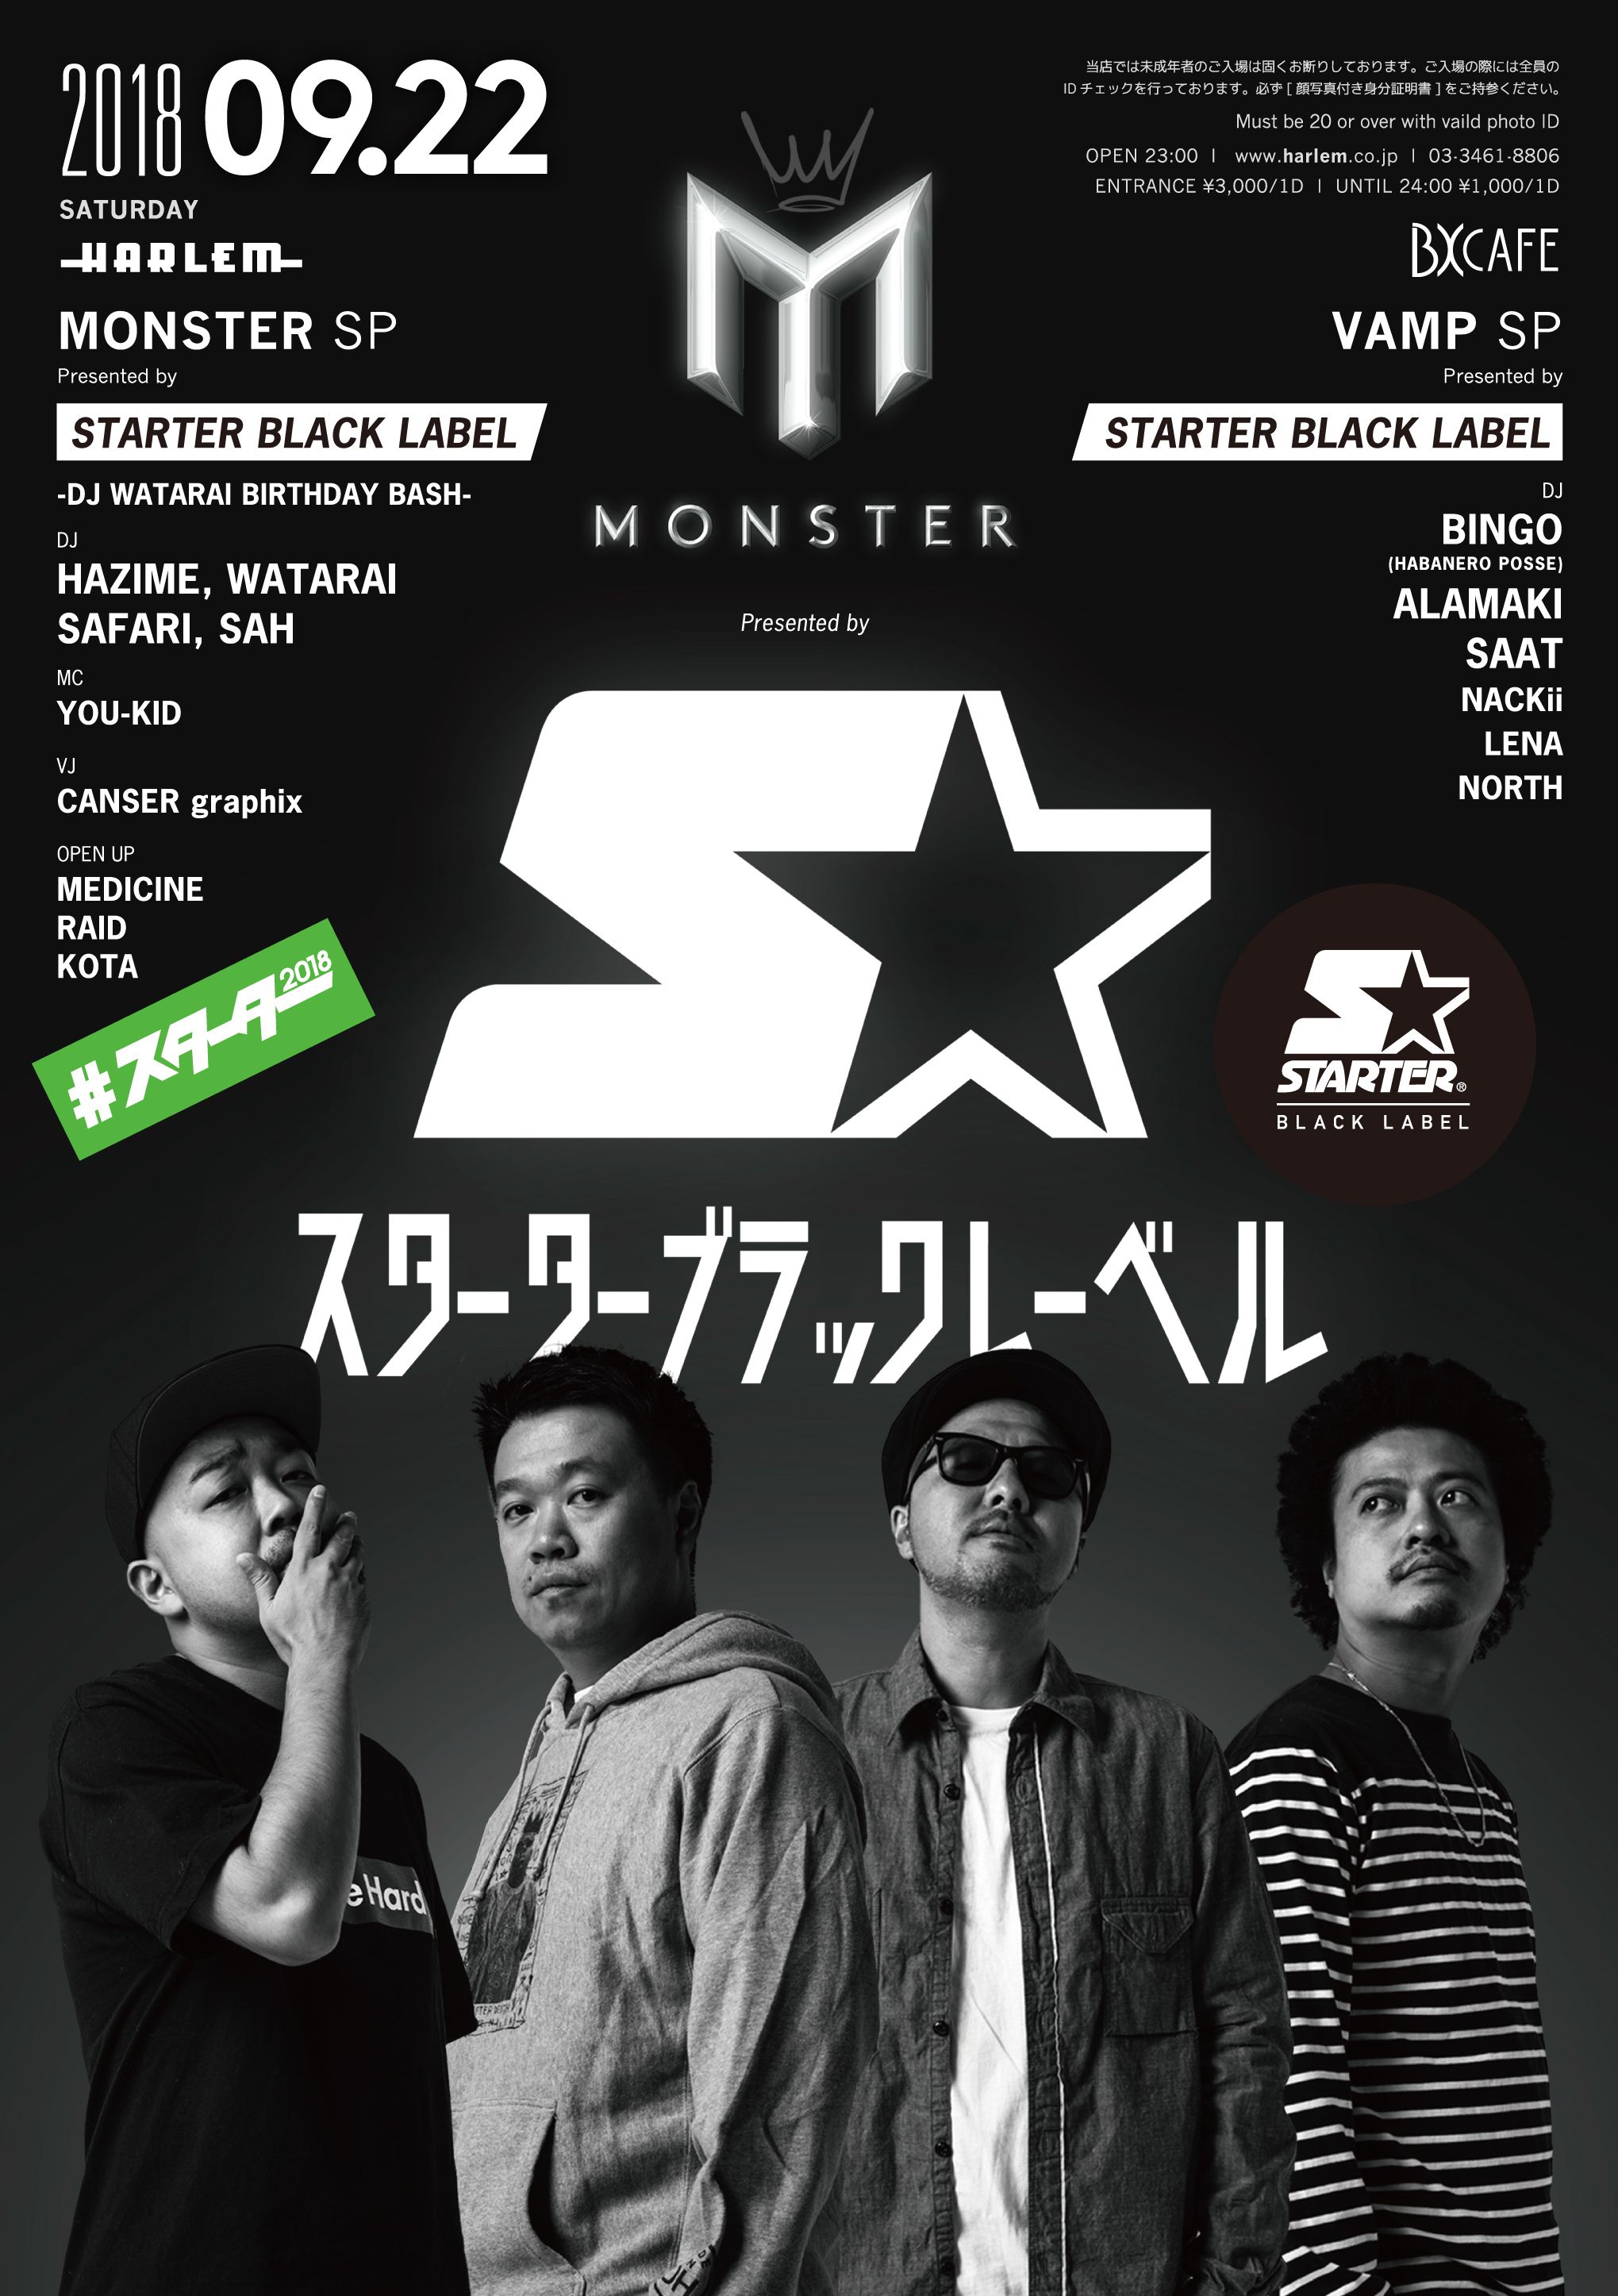 MONSTER Presented by STARTER BLACK LABEL -DJ WATARAI BIRTHDAY BASH-